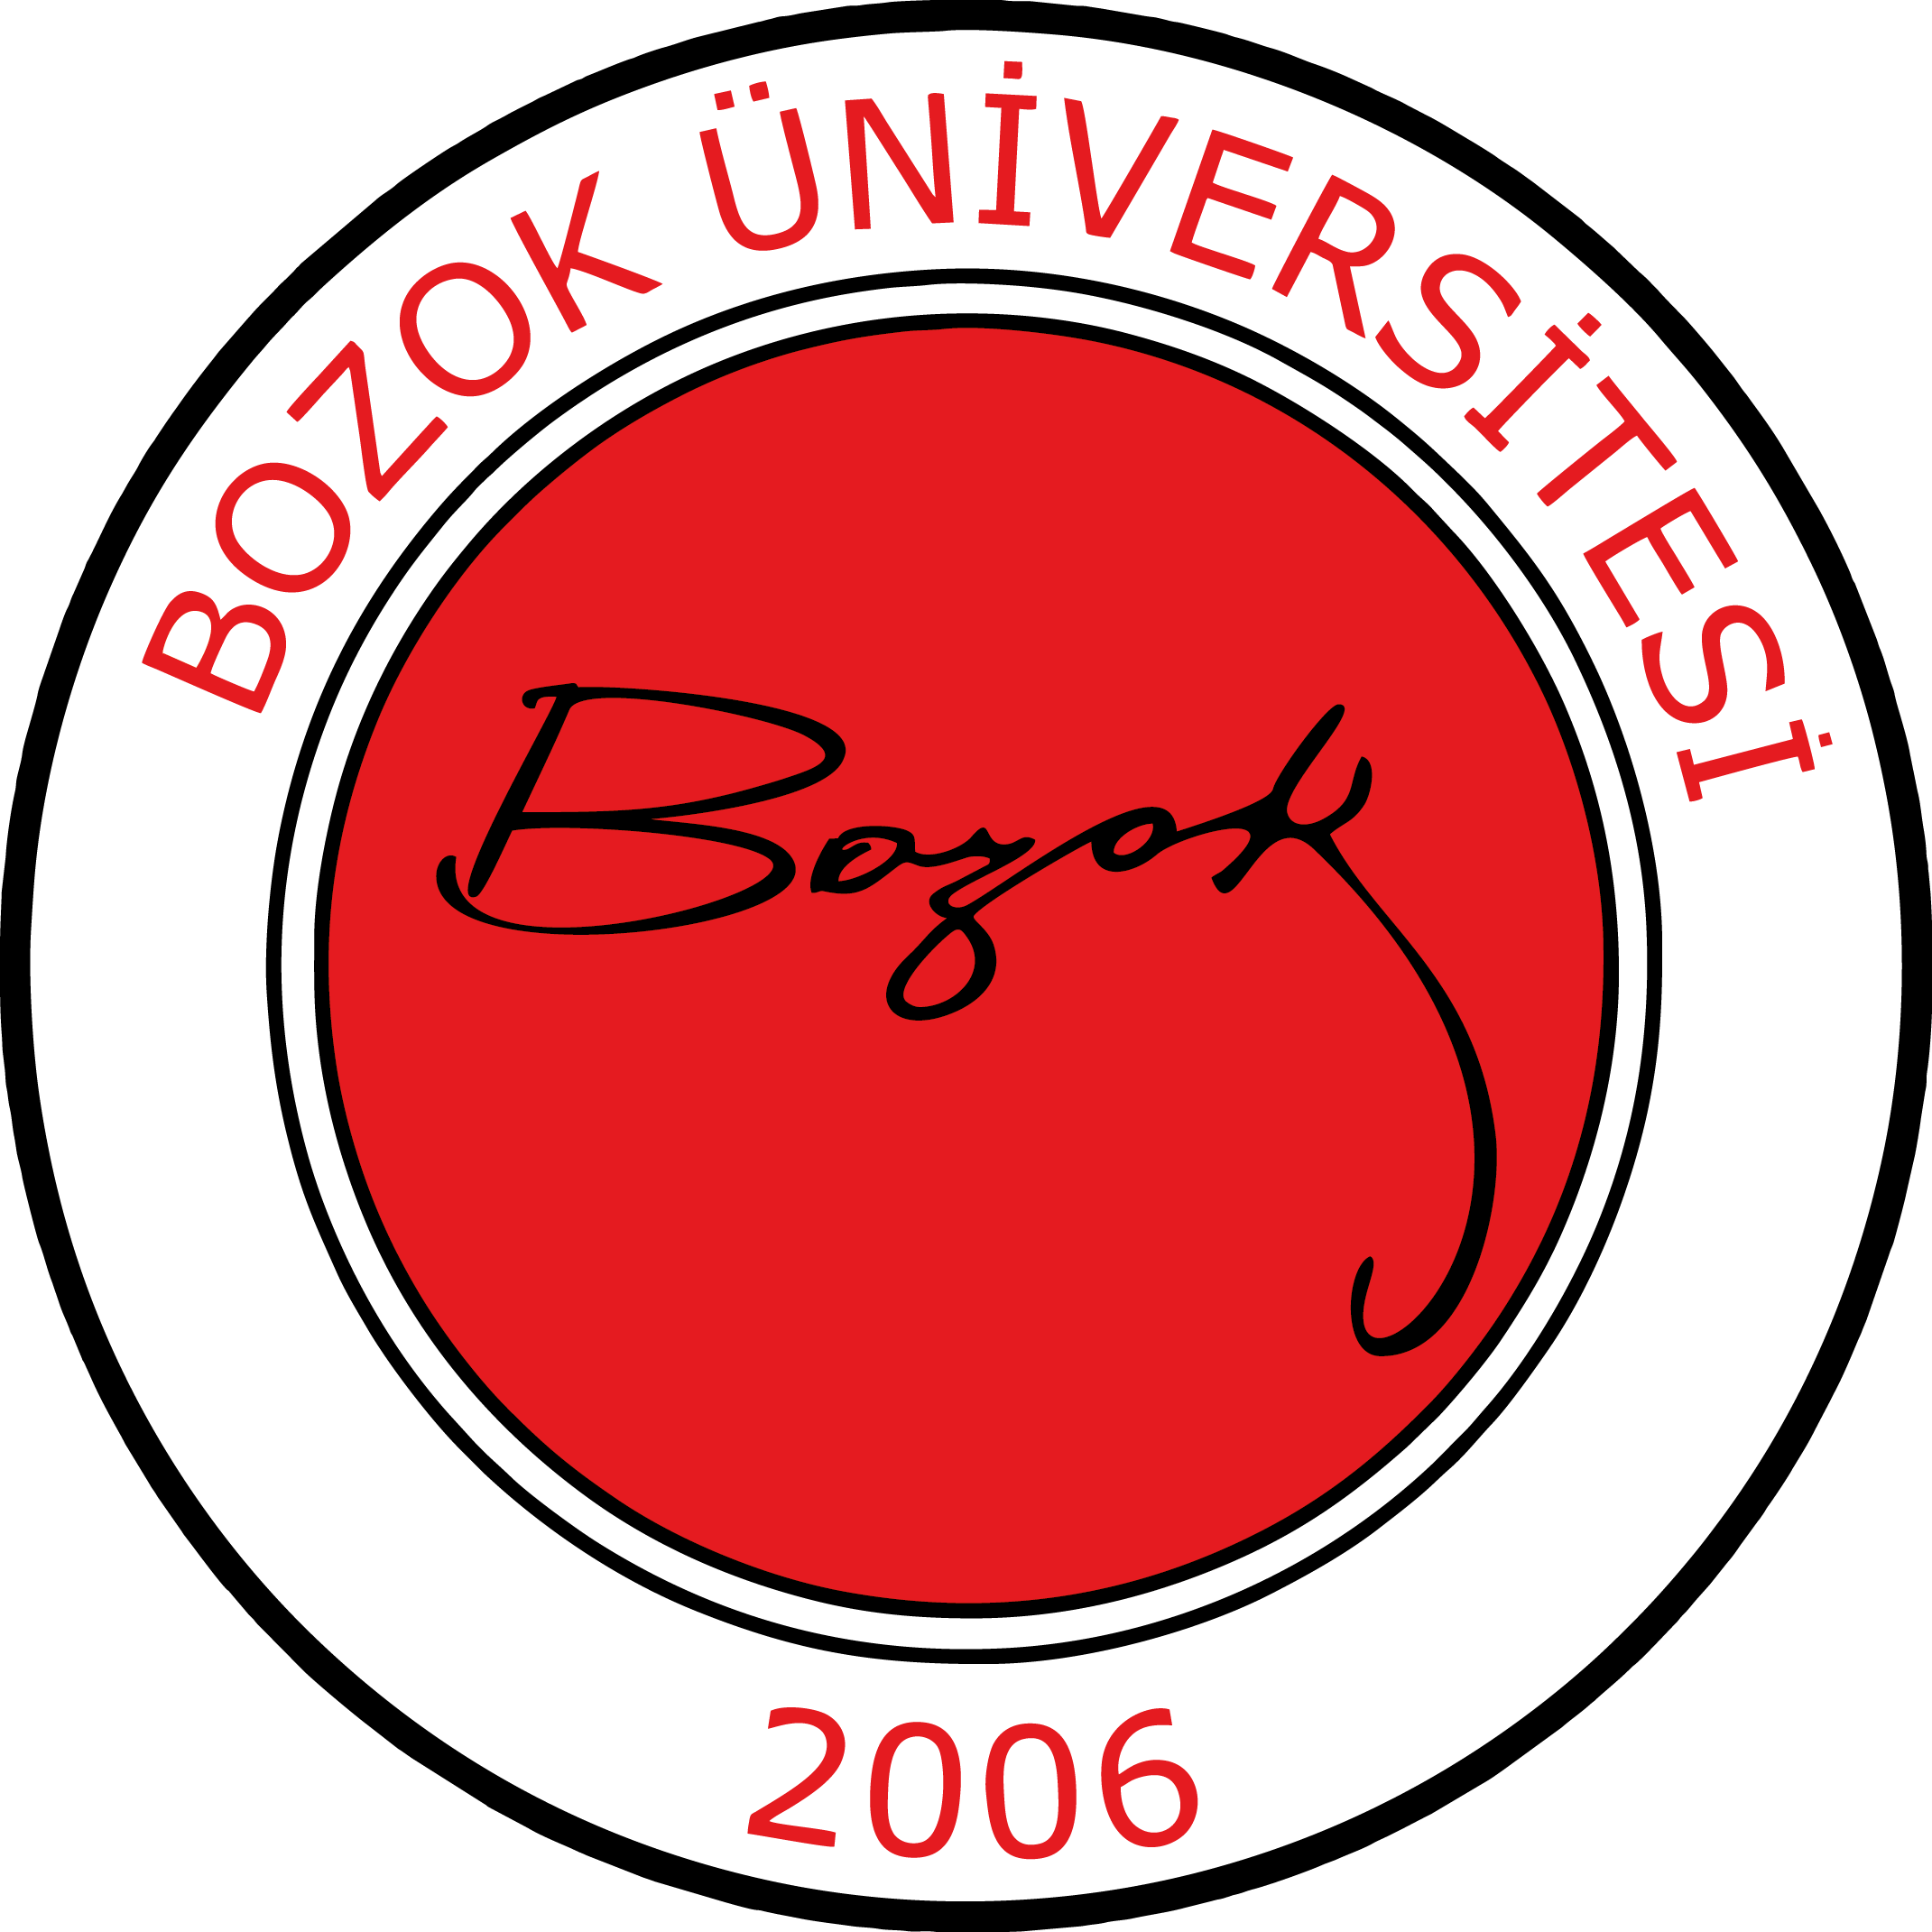 Download Bozok Universitesi Logo Arma Bozok University Png Image With No Background Pngkey Com